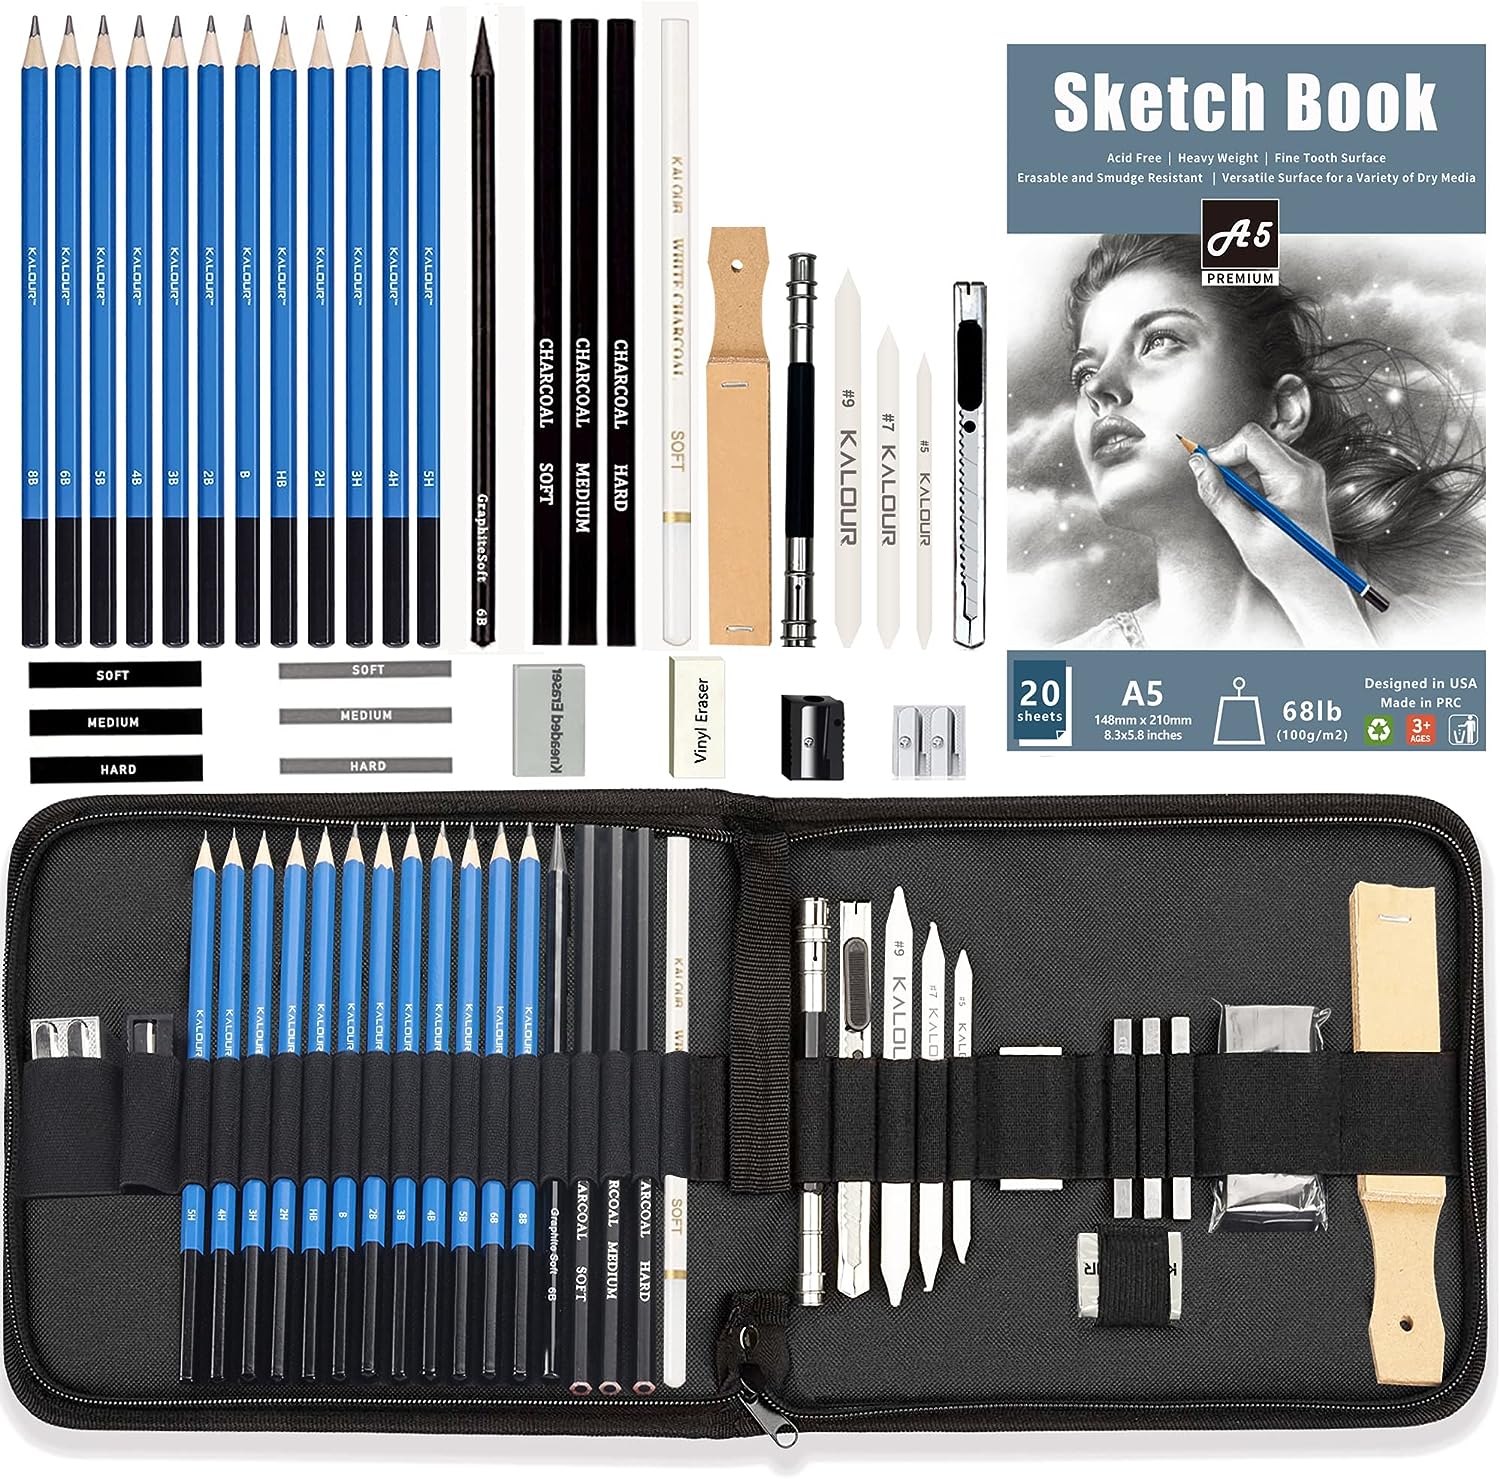 KALOUR 33 Pieces Pro Drawing Kit Sketching Pencils Set,Portable Zippered Travel Case-Charcoal Pencils, Sketch Pencils, Charcoal Stick,Sharpener